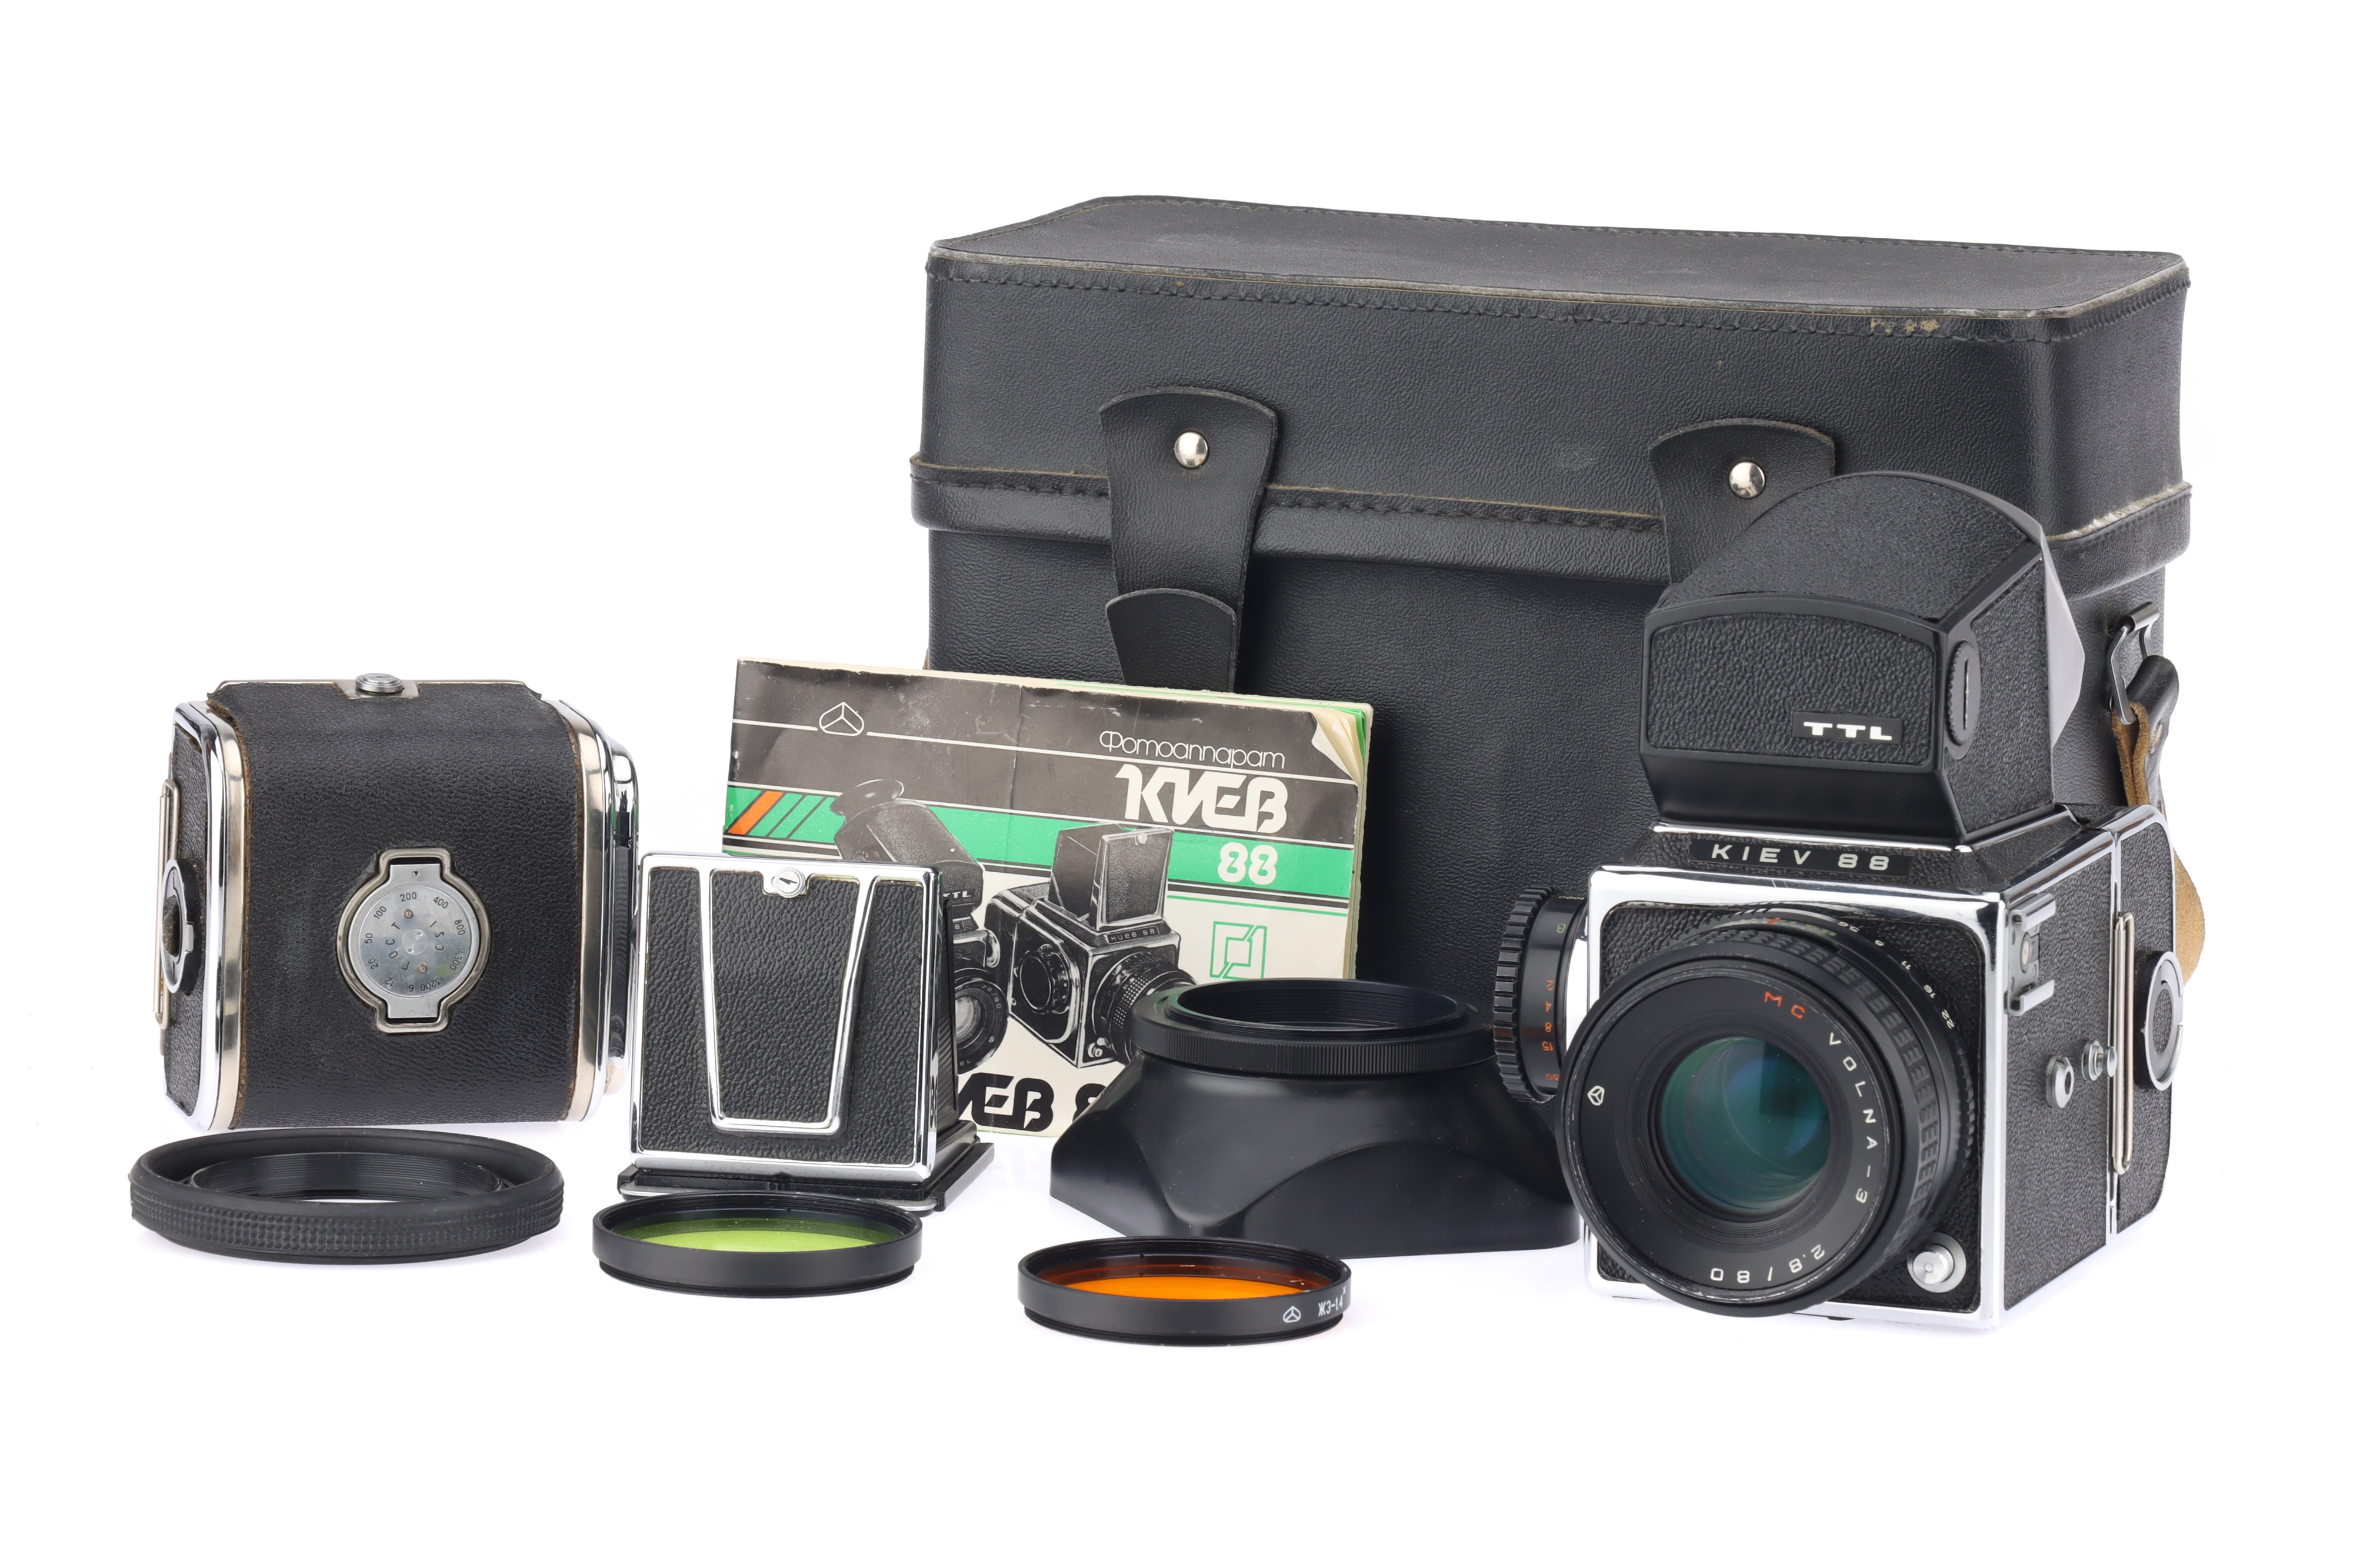 An Arsenal Kiev 88 Medium Format SLR Camera Outfit,